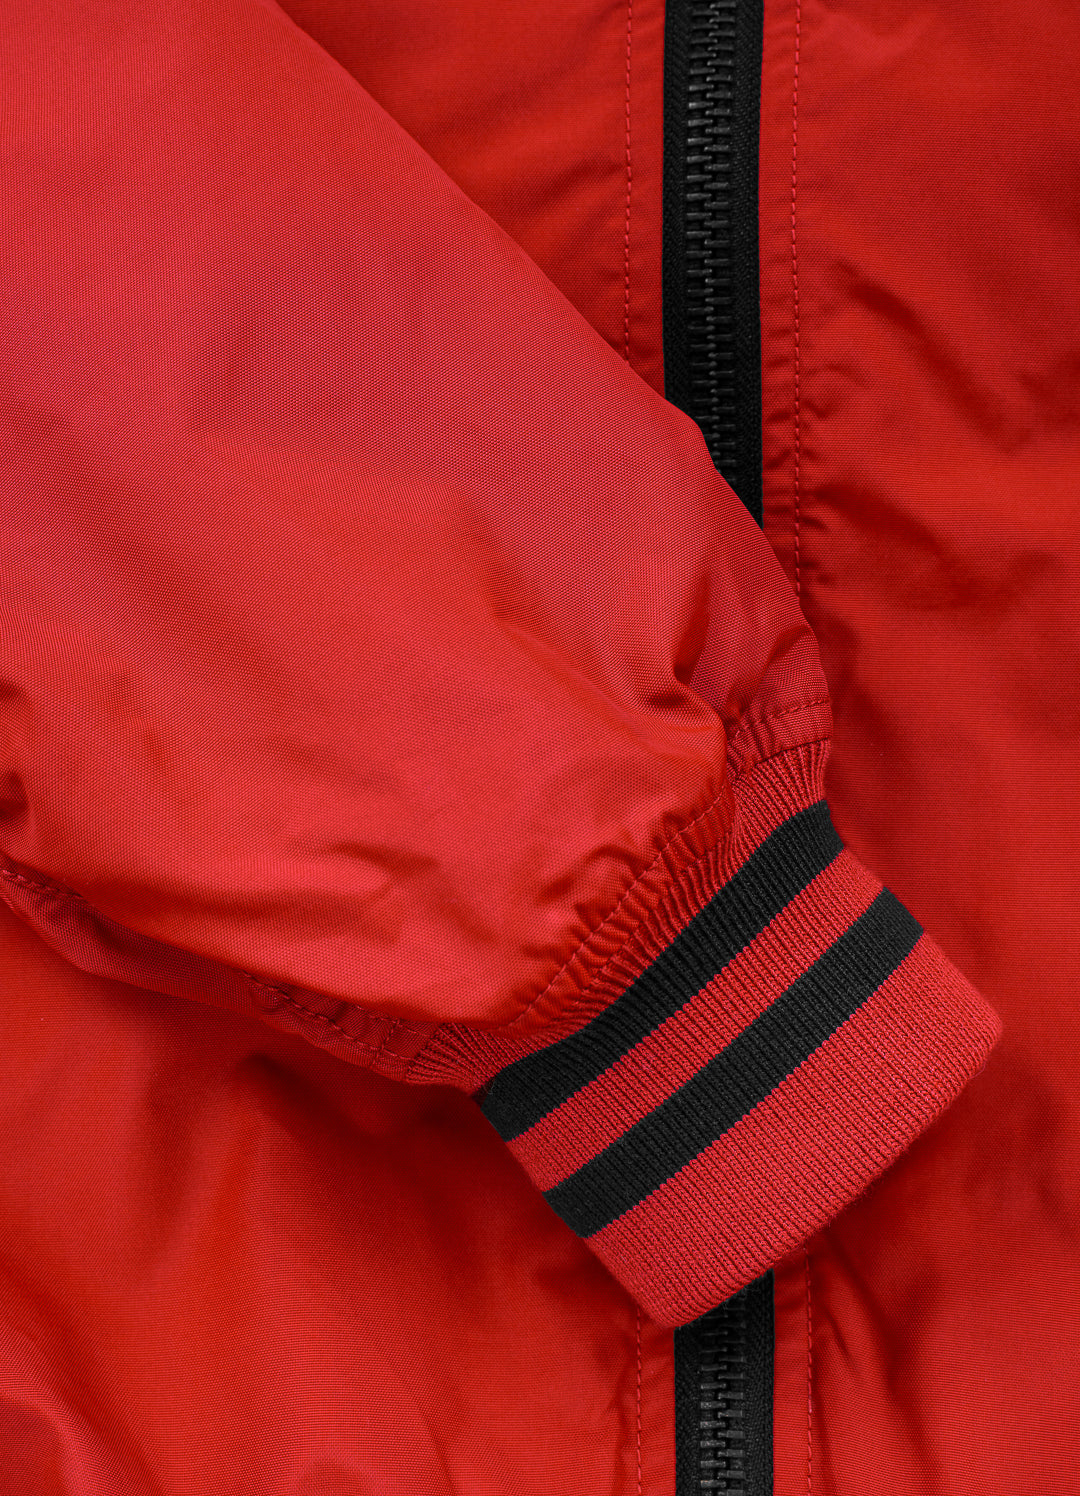 NIMITZ Flame Red Jacket.